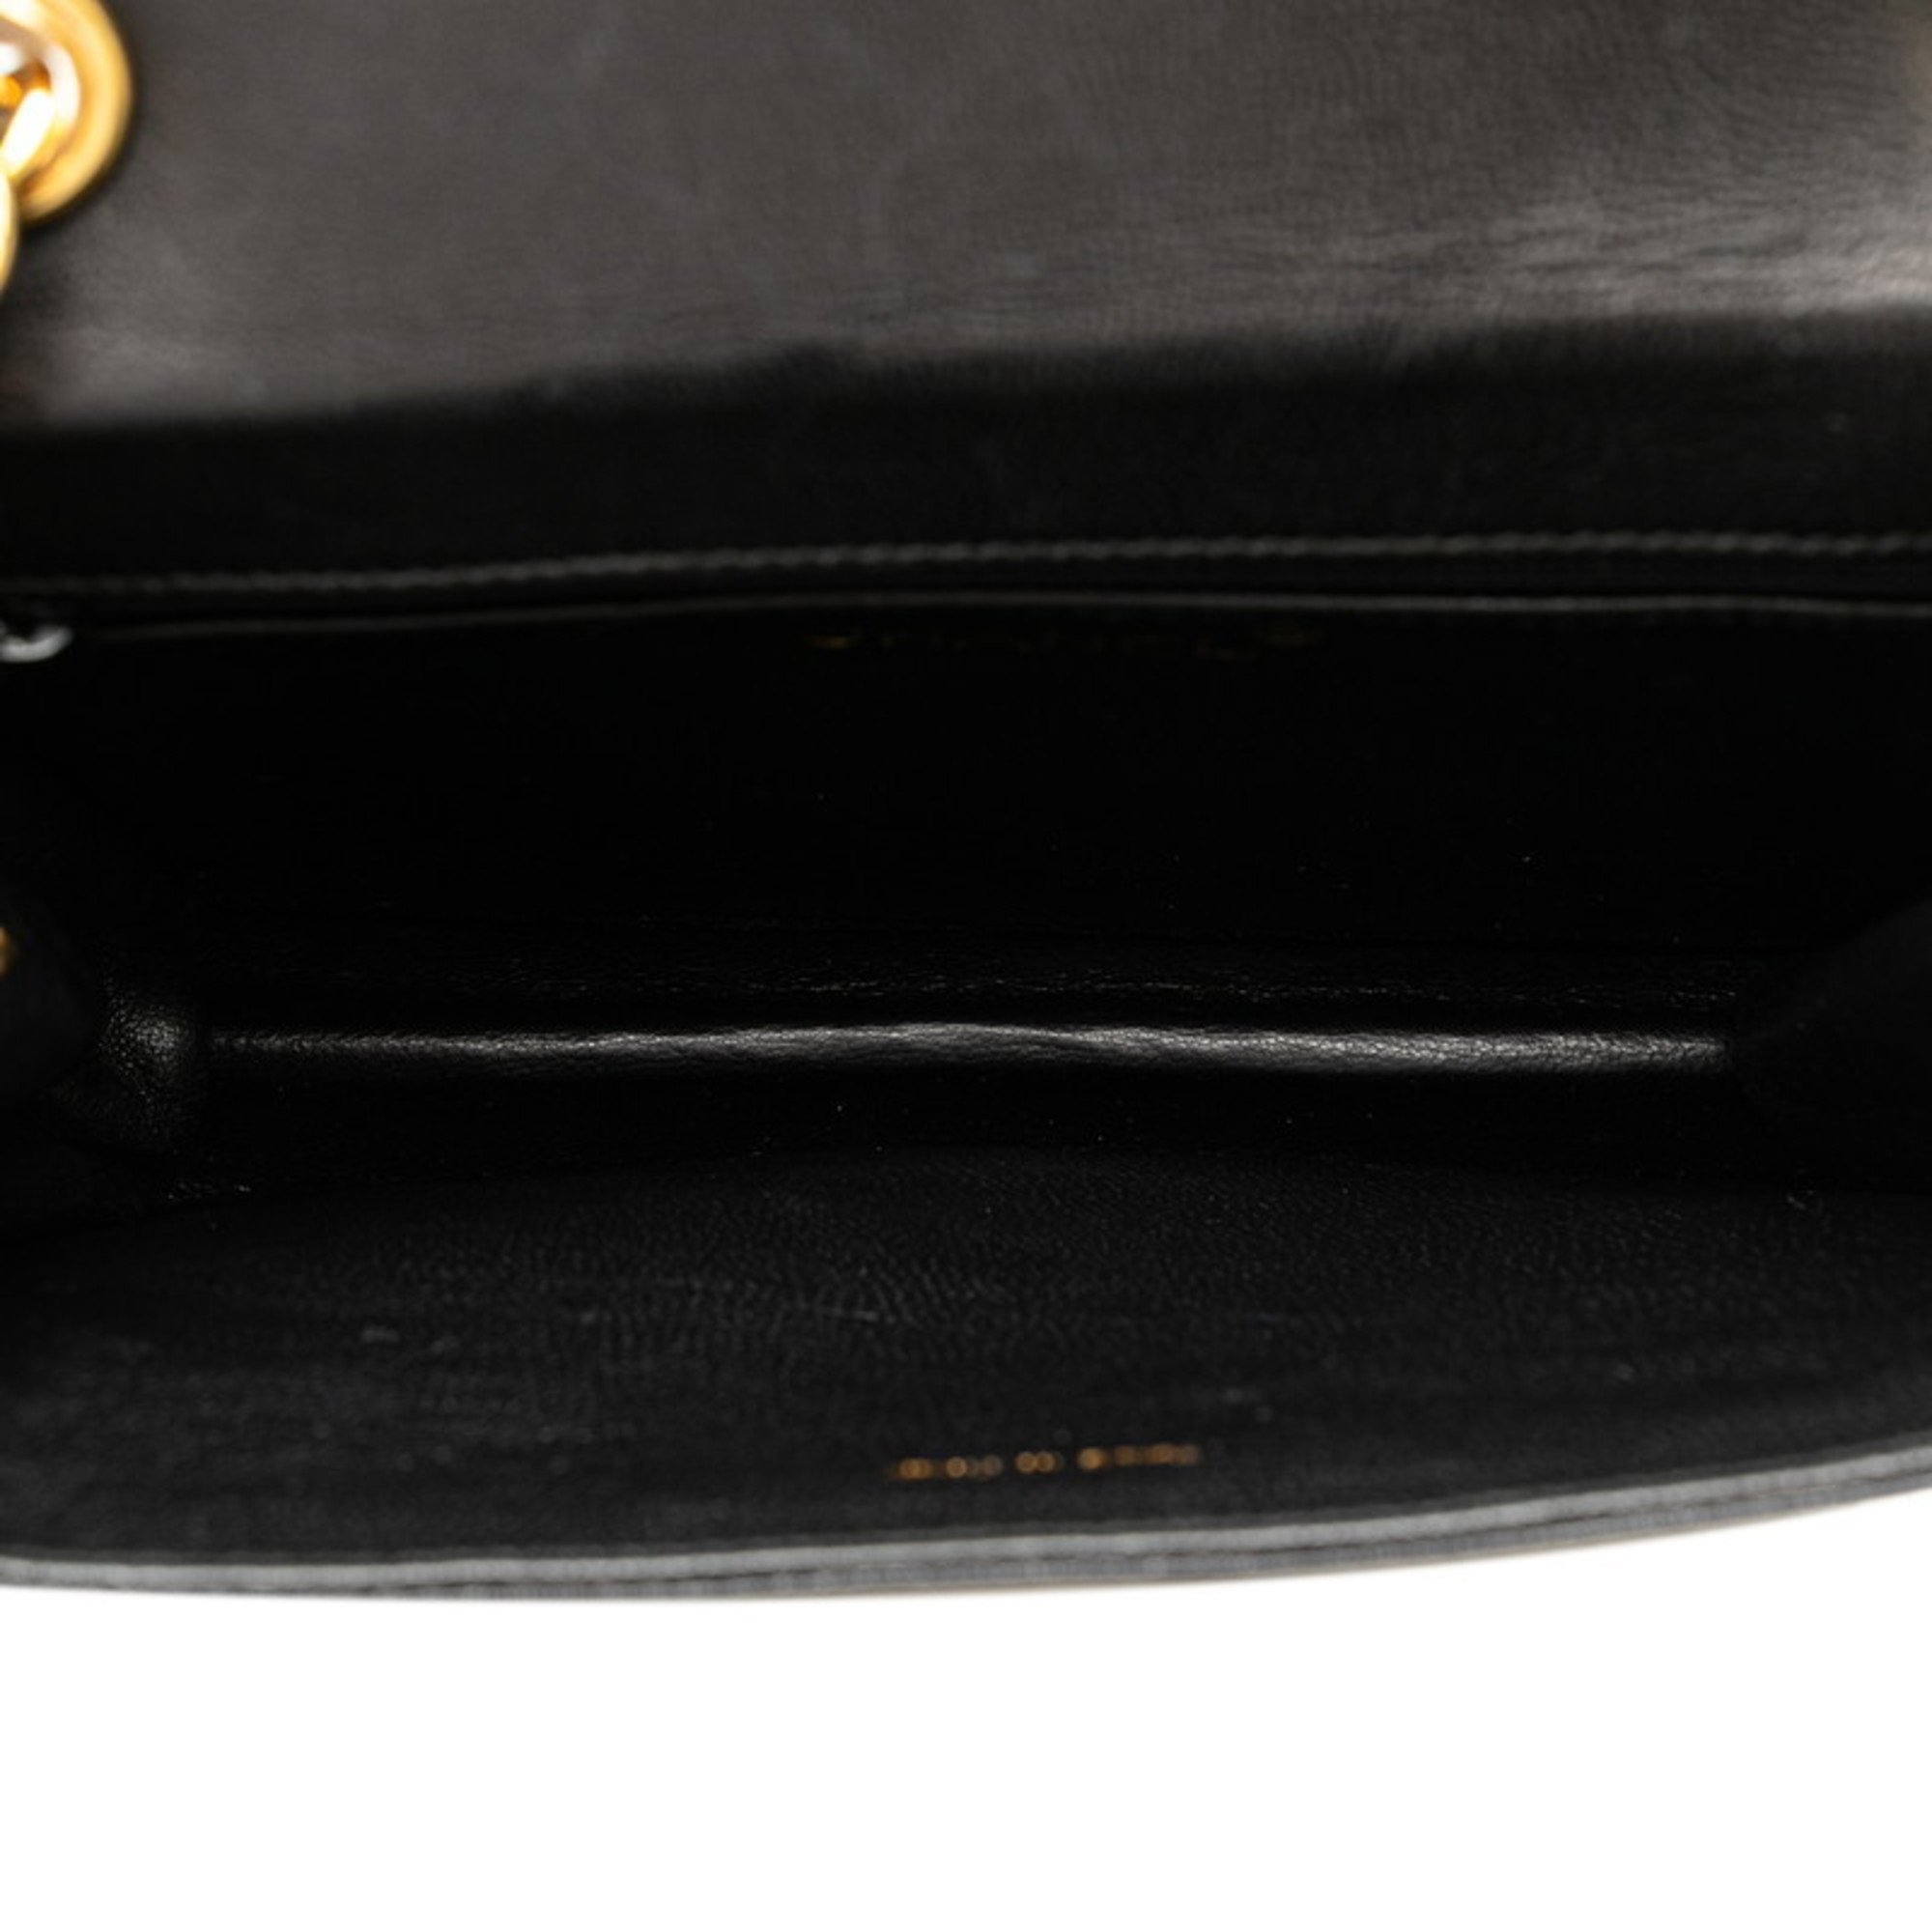 Chanel Matelasse Coco Mark Chain Shoulder Bag Black Lambskin Women's CHANEL